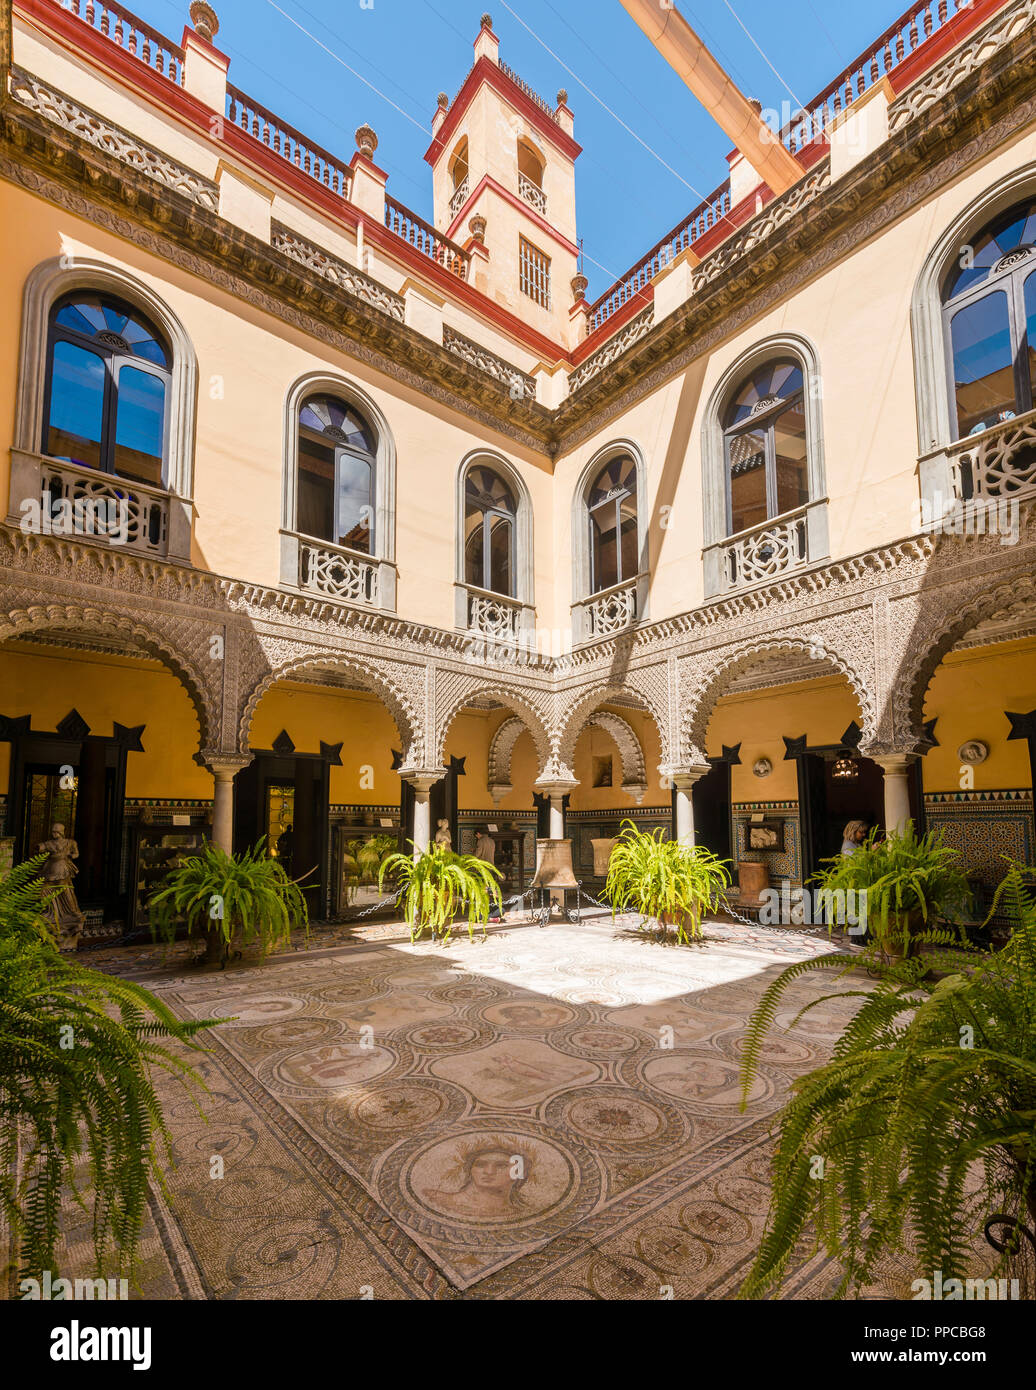 16th century palace, Moorish architecture, courtyard decorated with Roman mosaic, sculptures., Palacio de la Condesa de Lebrija Stock Photo